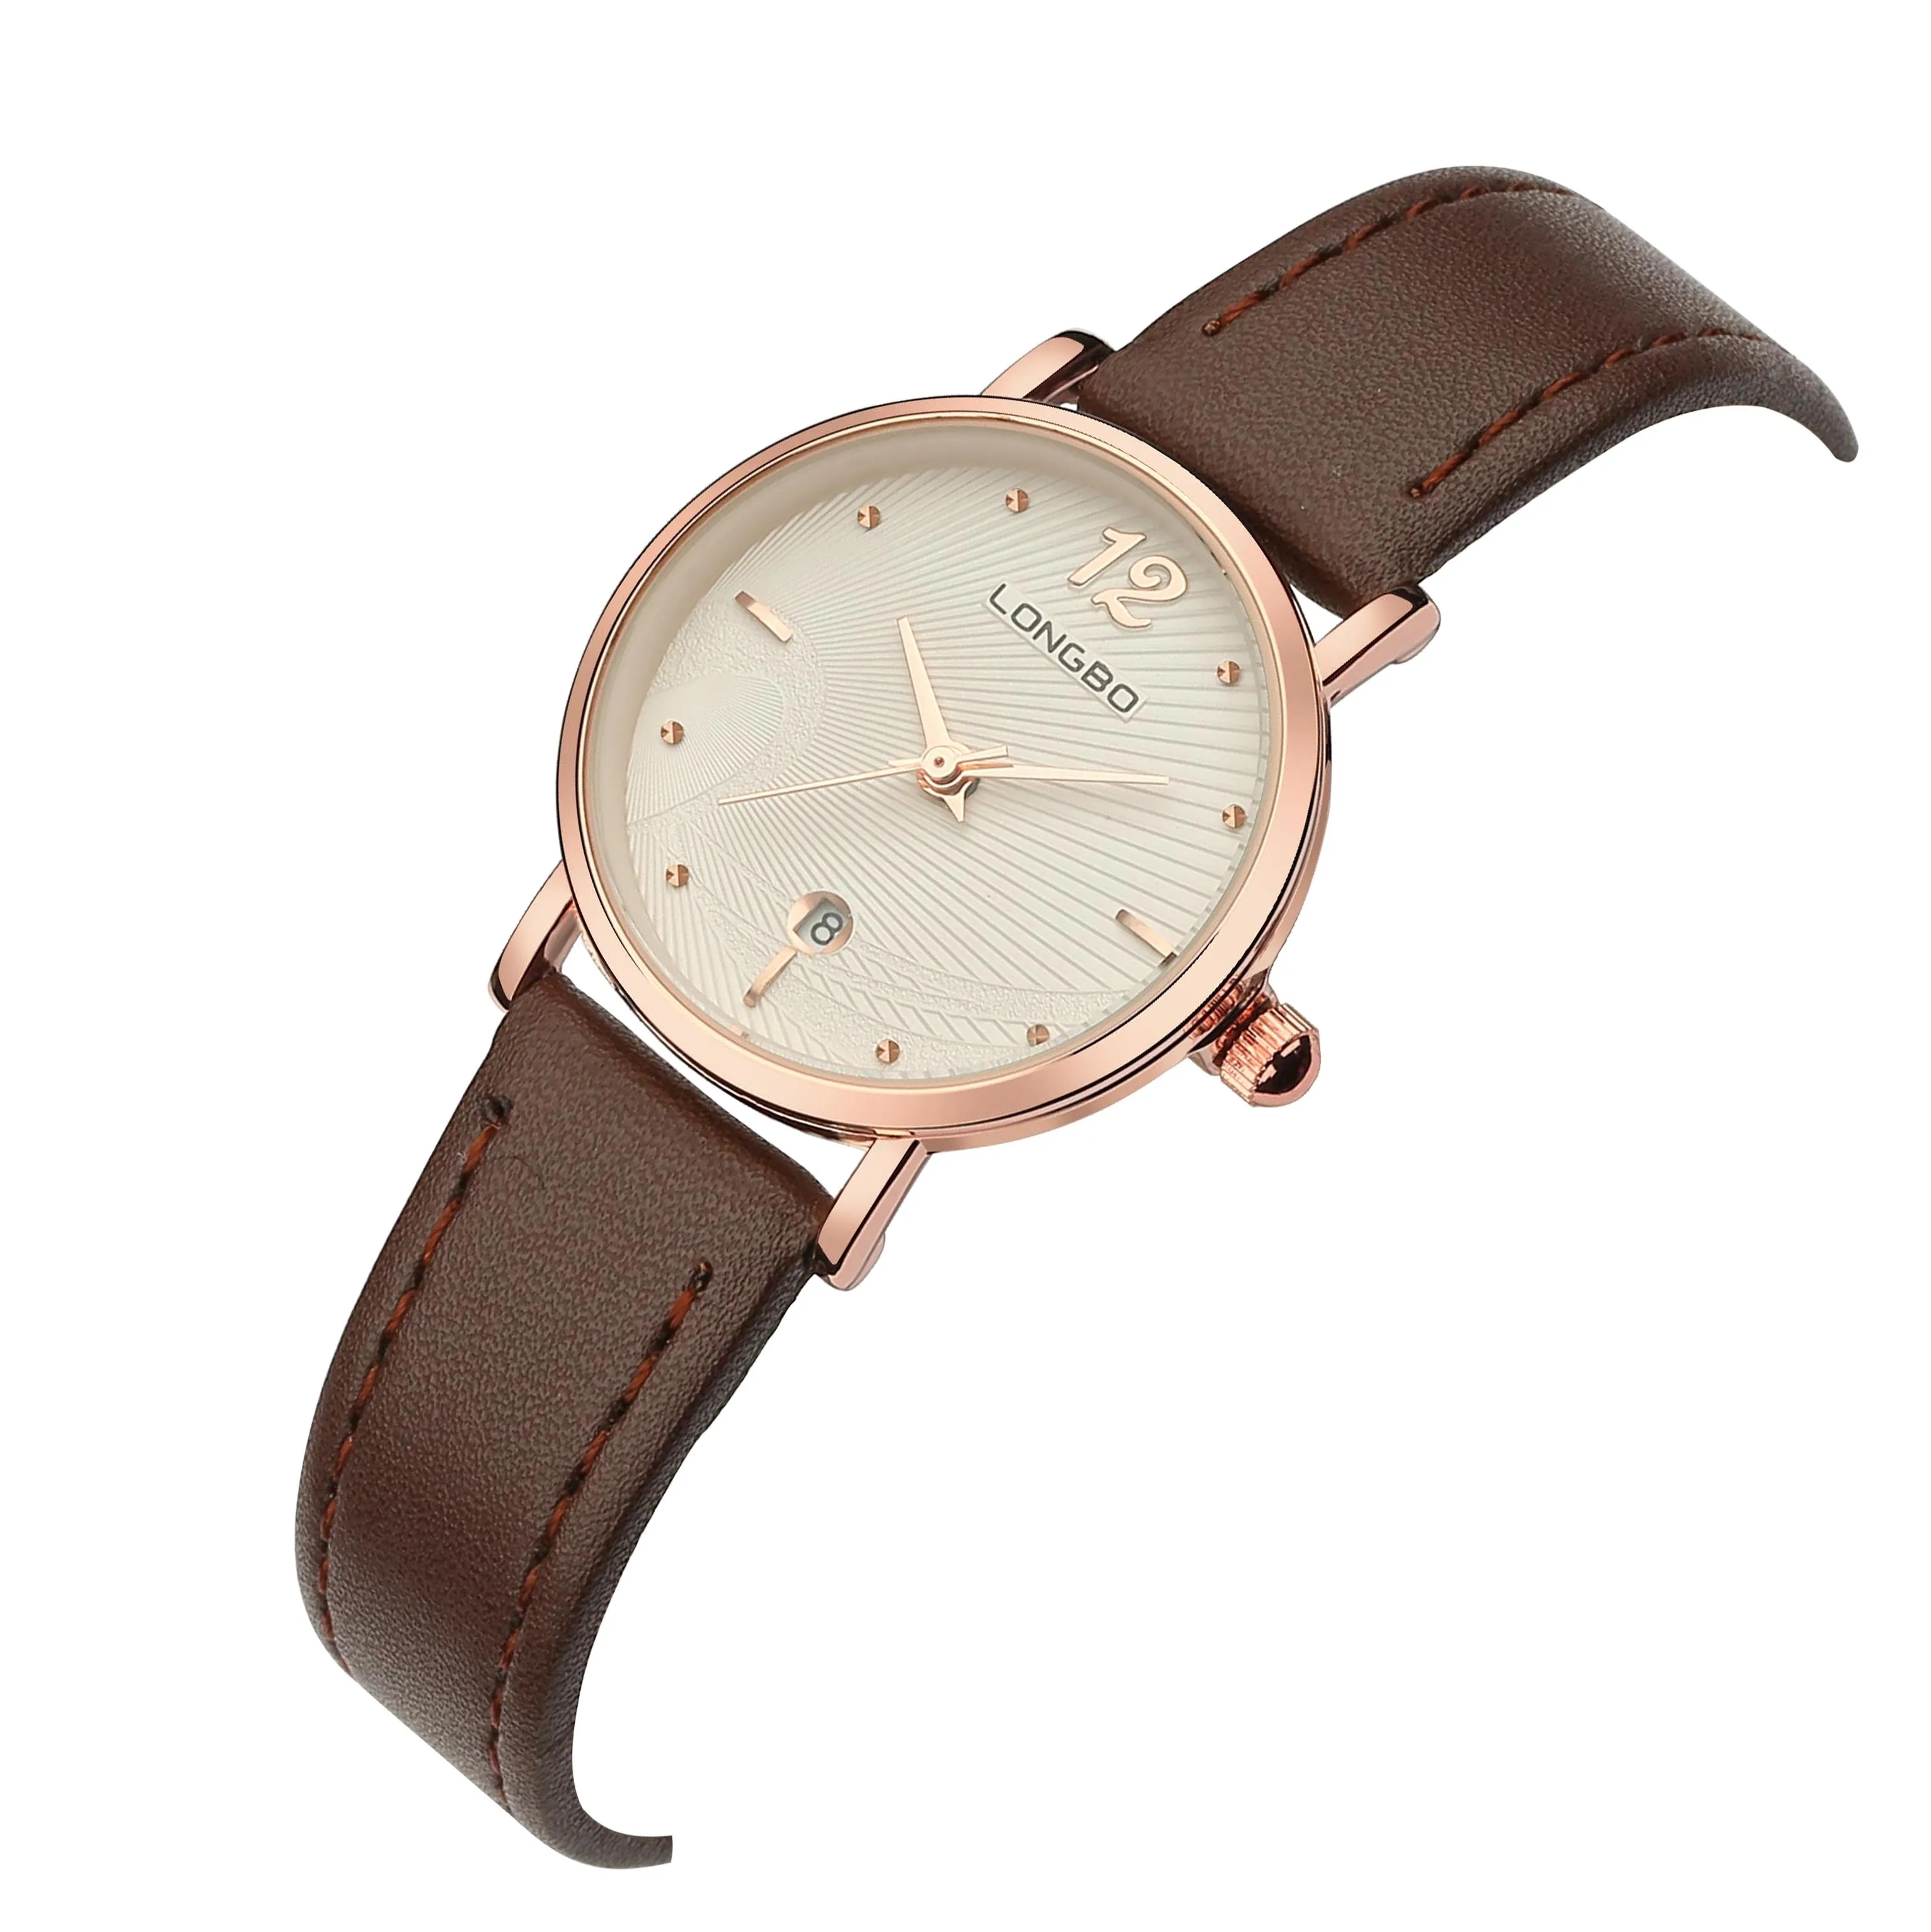 

LONGBO Top Luxury Brand Men Sports Military Watches Mens Quartz Analog Hour Date Clock Fashion Casual Wrist watch 7288